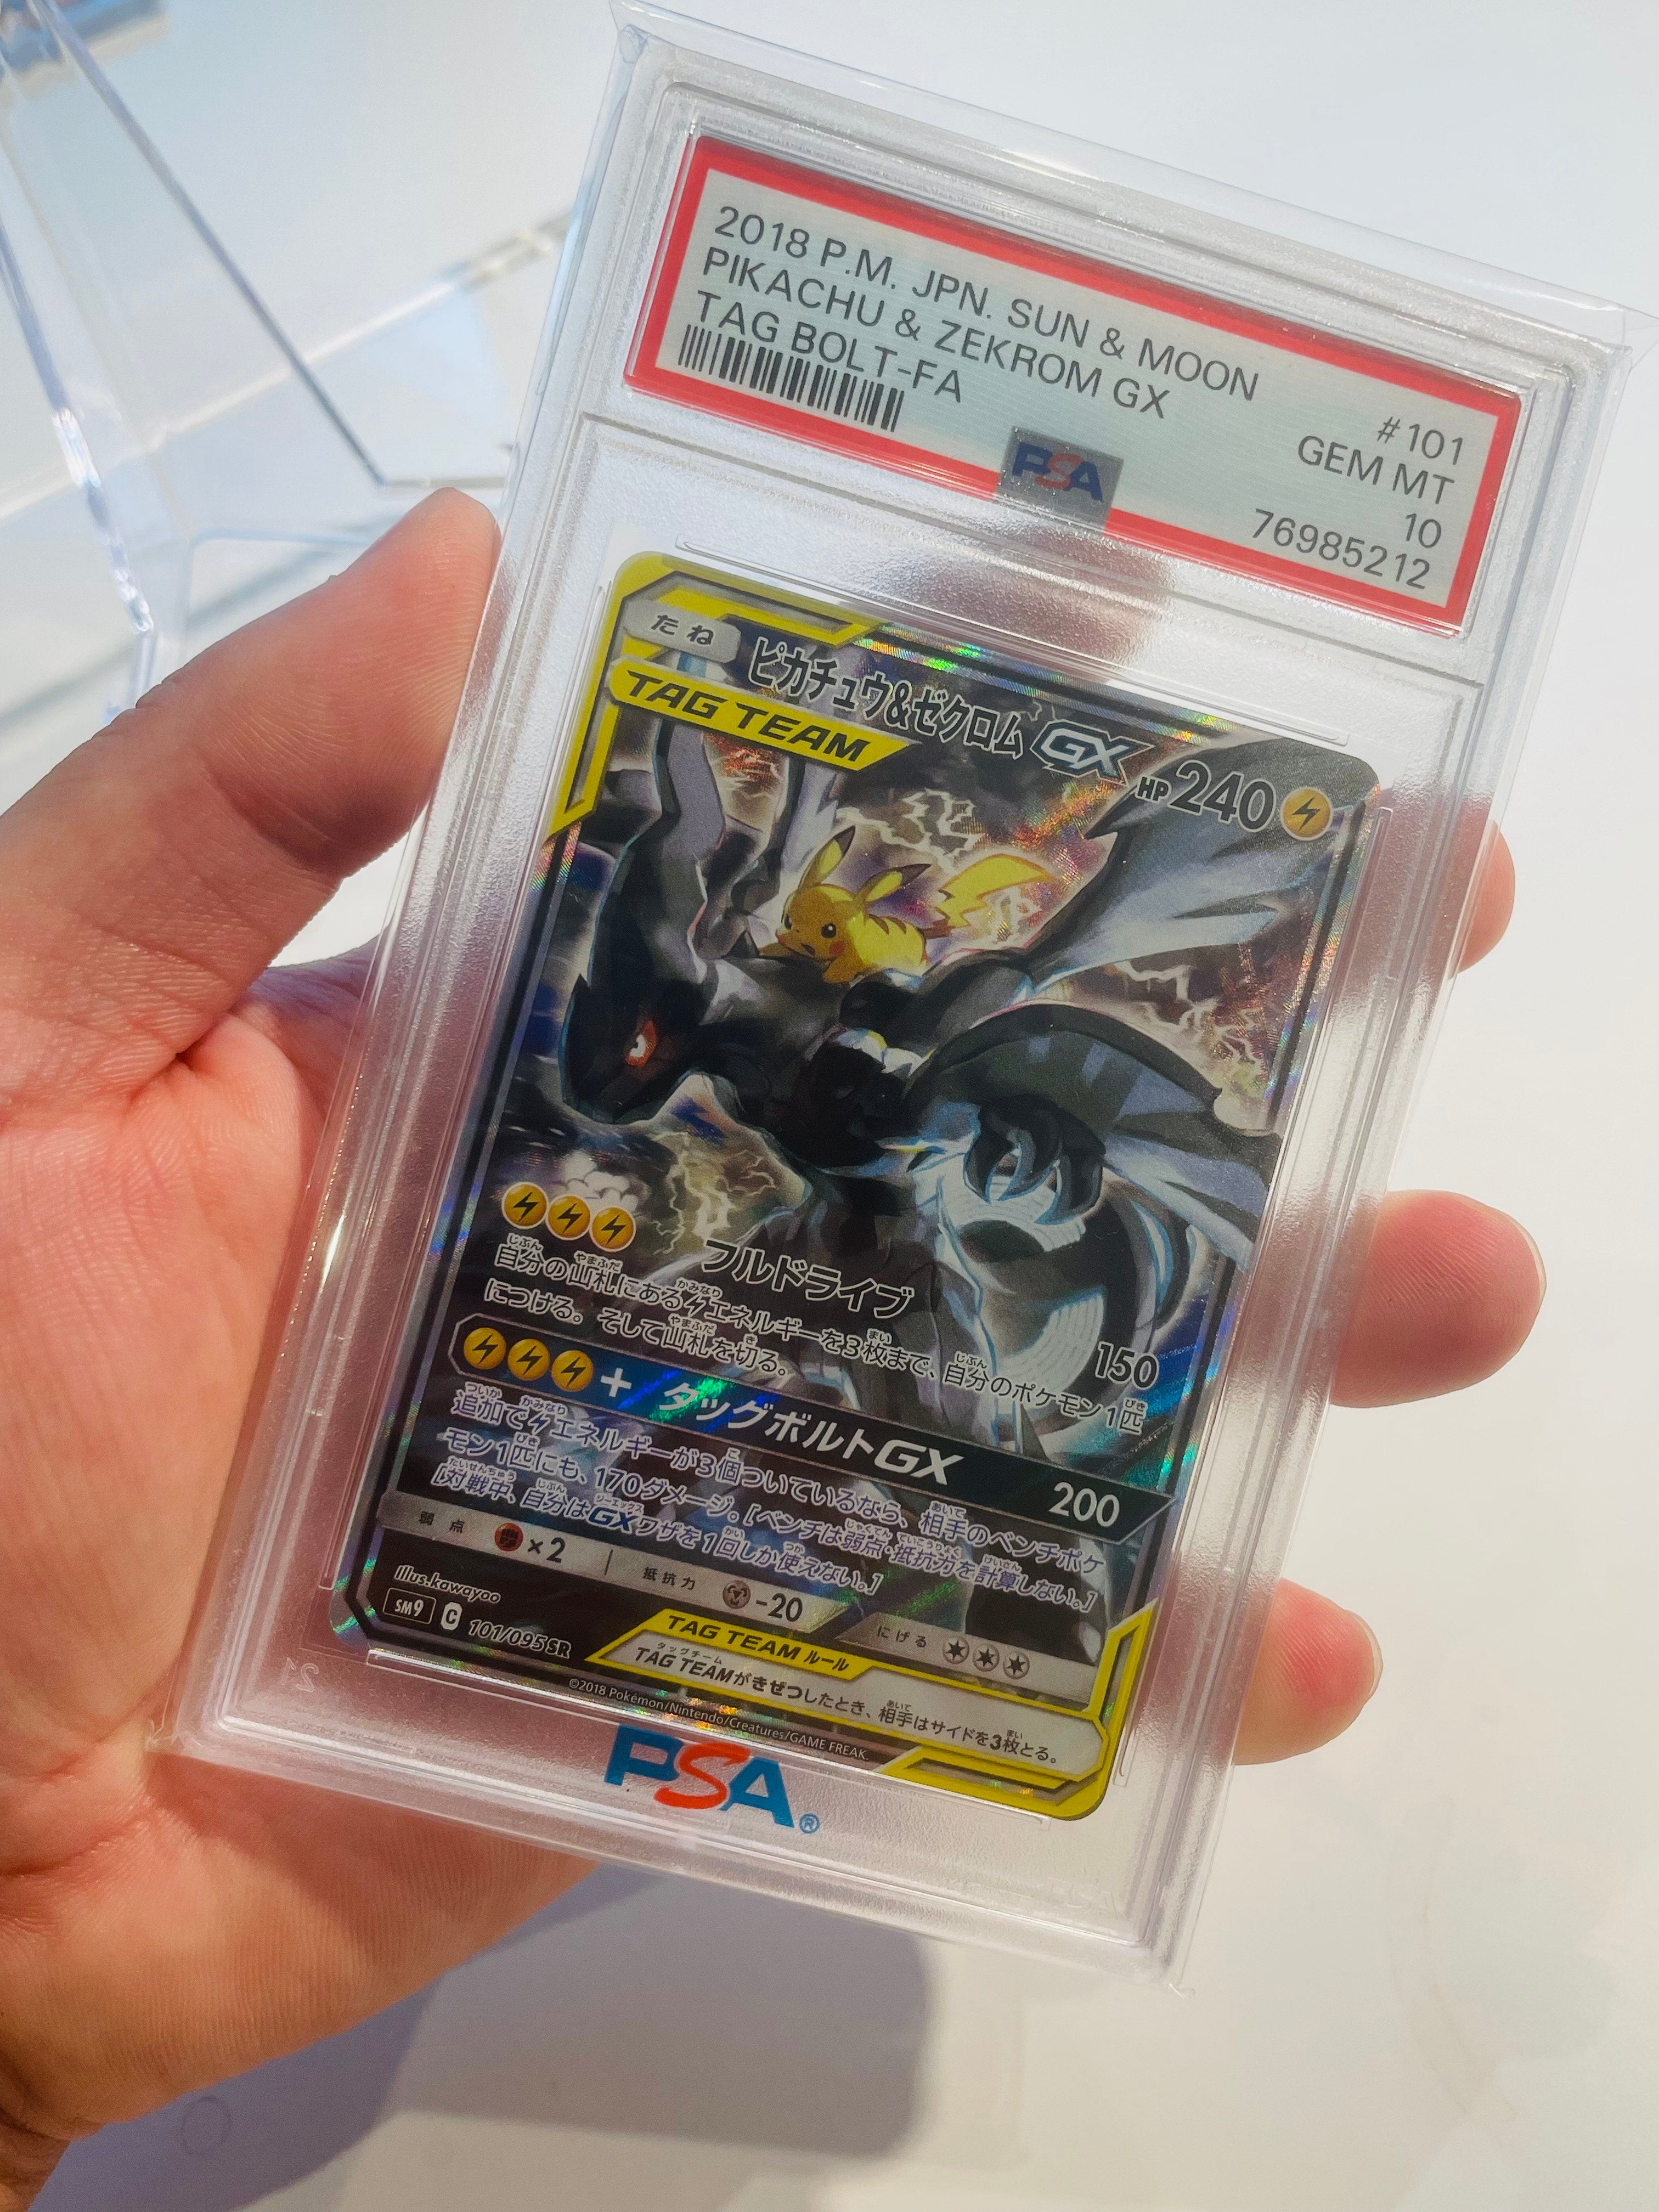 Pikachu Zekrom GX Sa Sm9 101/095 SR F/A Pokemon Card Japanese PSA 